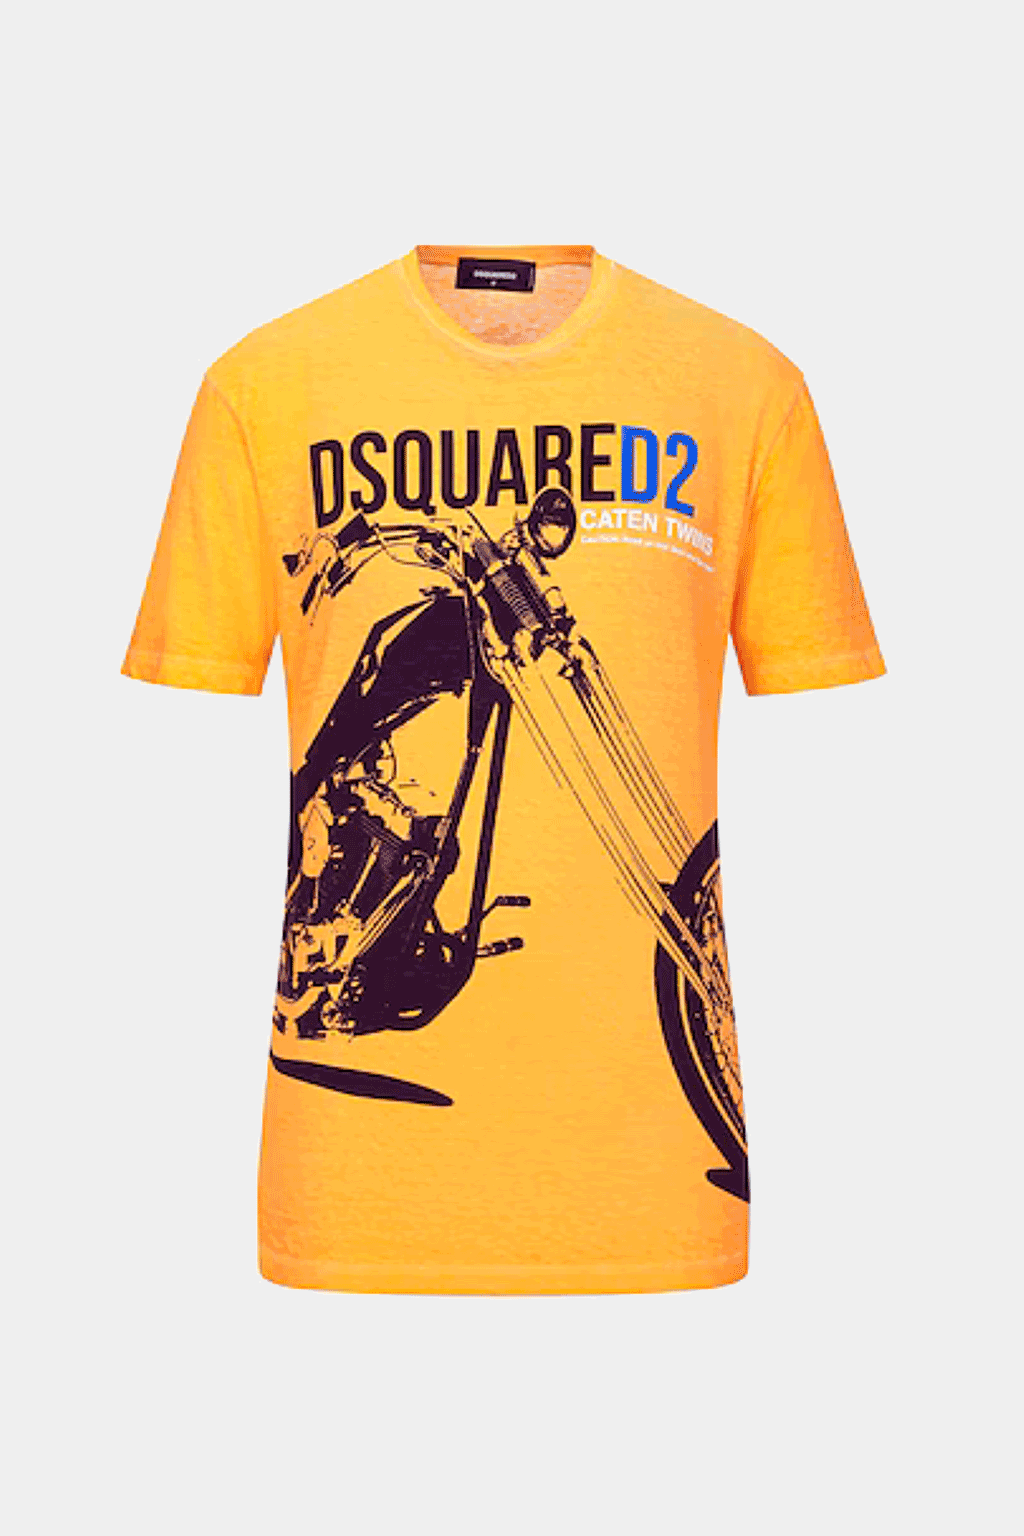 Dsquared2 - Men's Round Neck T-Shirt